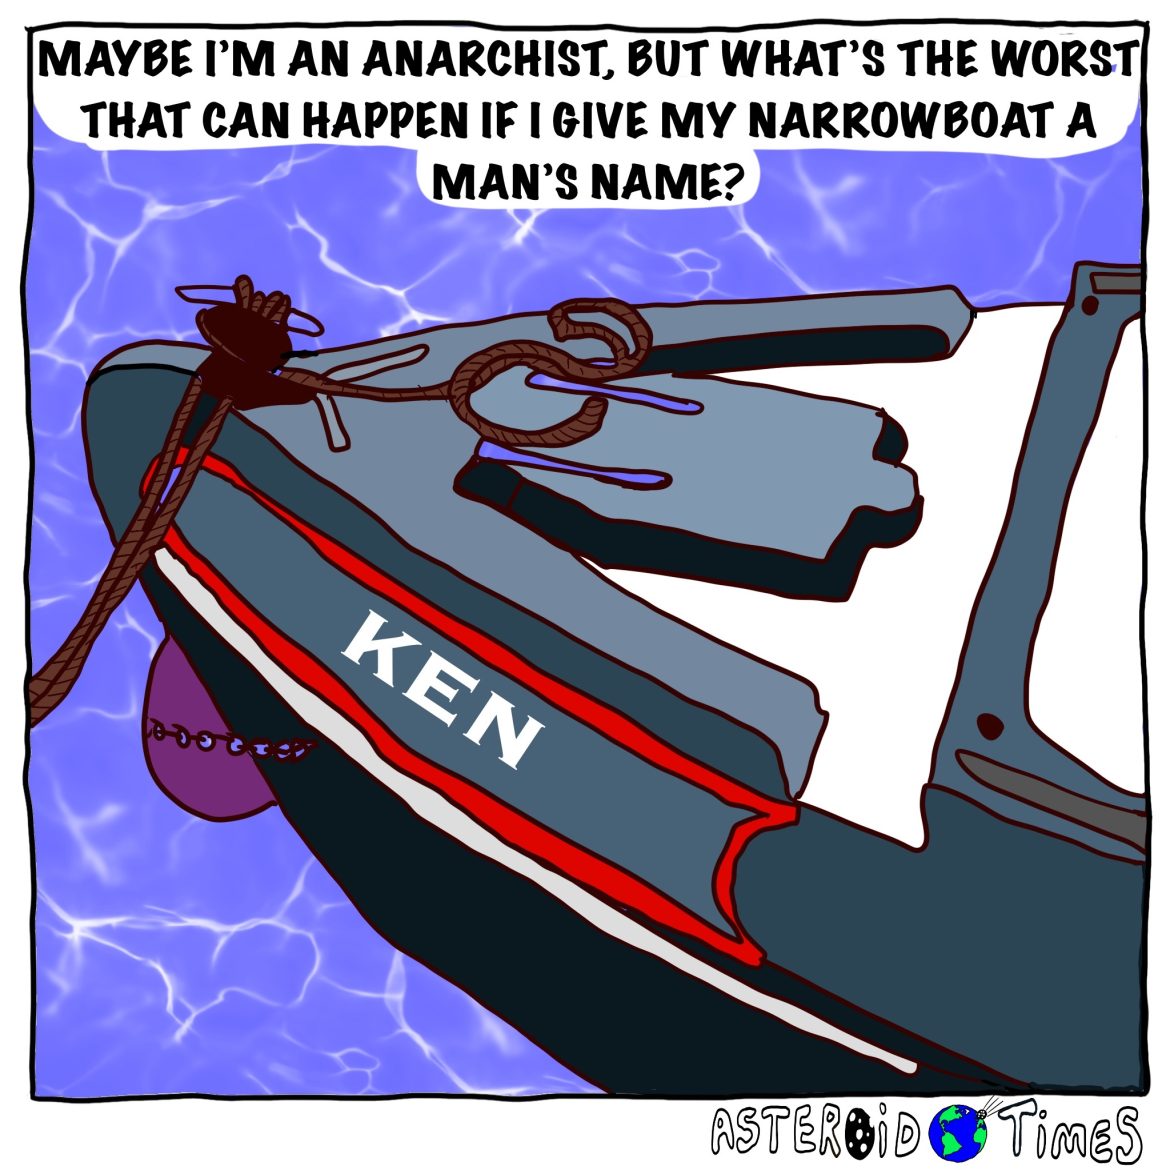 Male narrowboat name